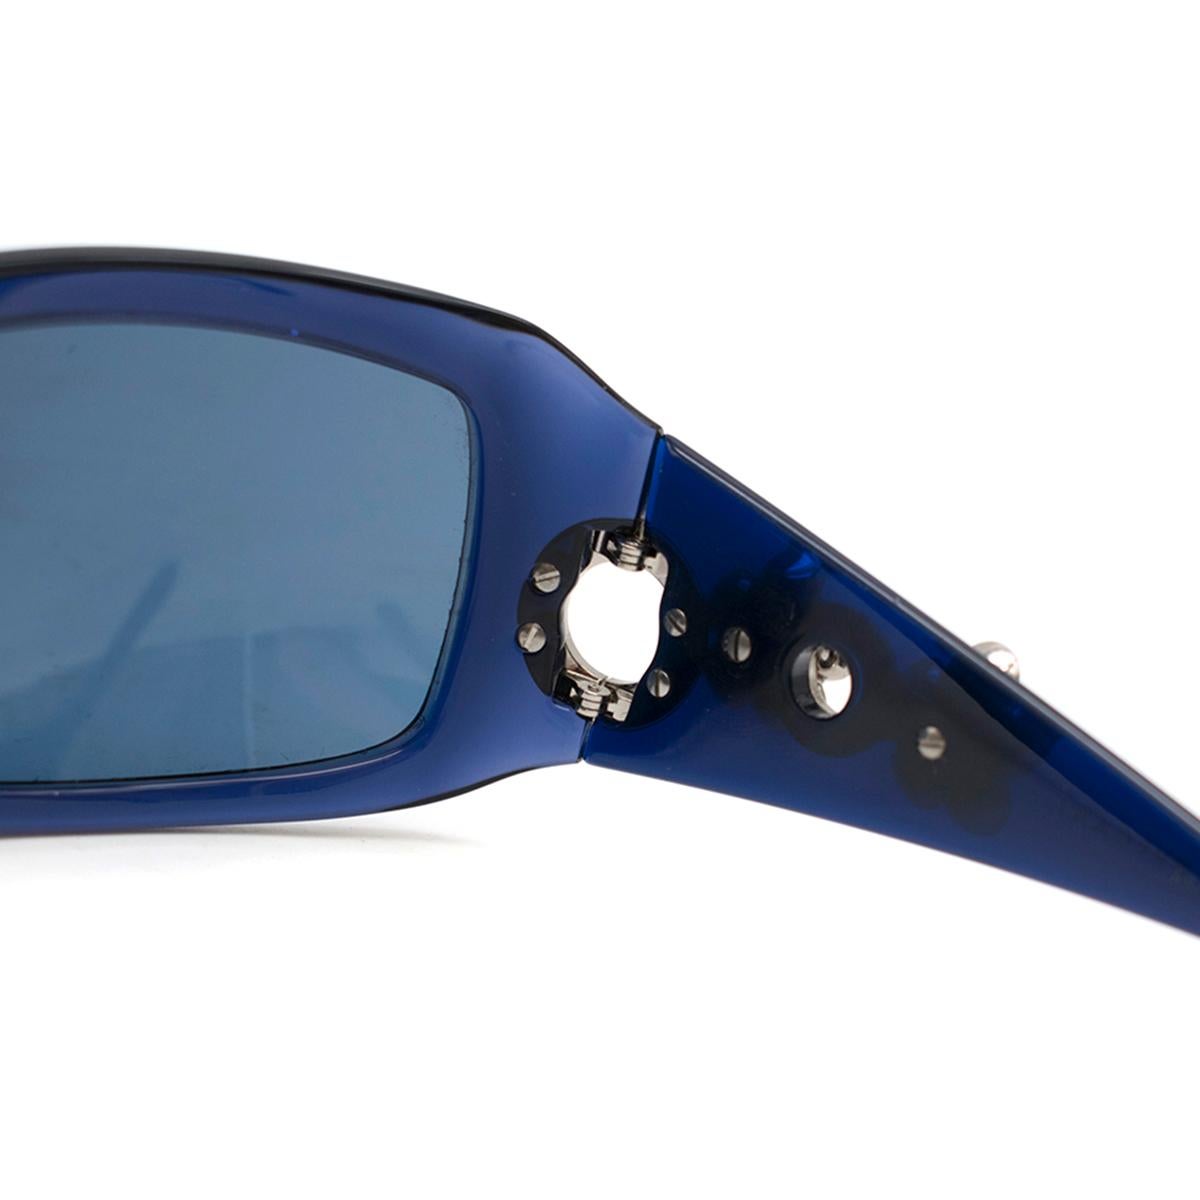 Women's Bvlgari Blue Swarovski Crystal Embellished Sunglasses